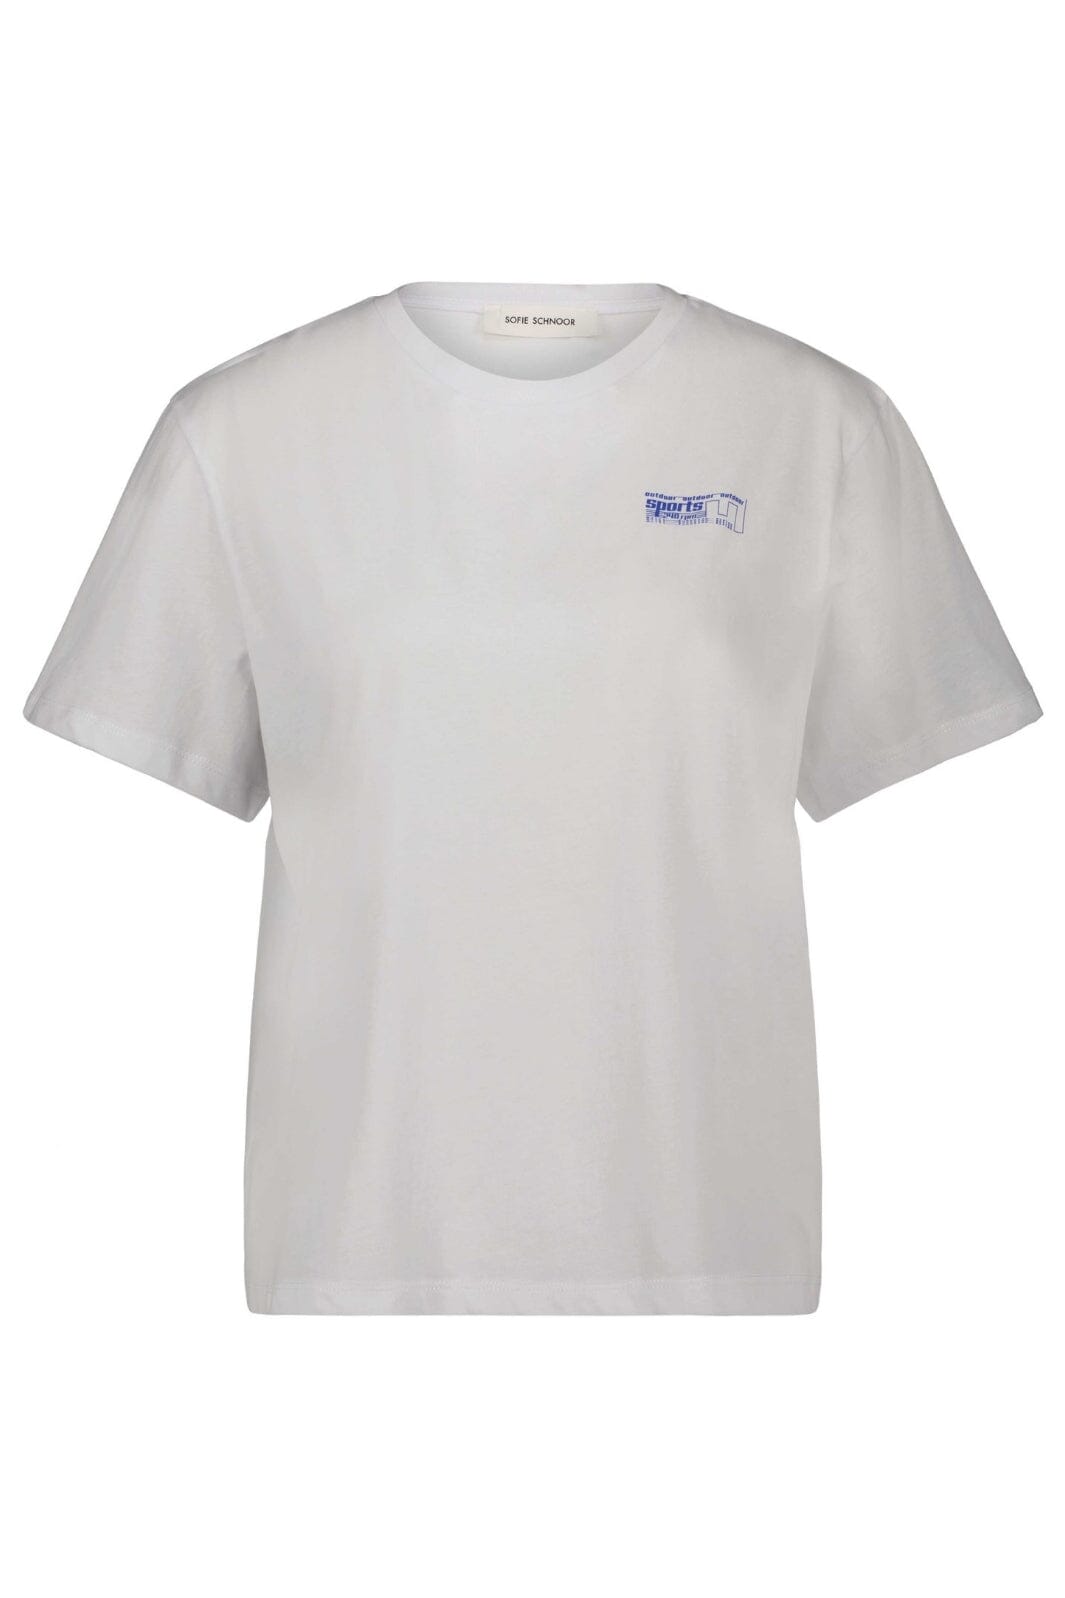 Sofie Schnoor - S241330 T-Shirt - Brilliant White T-shirts 